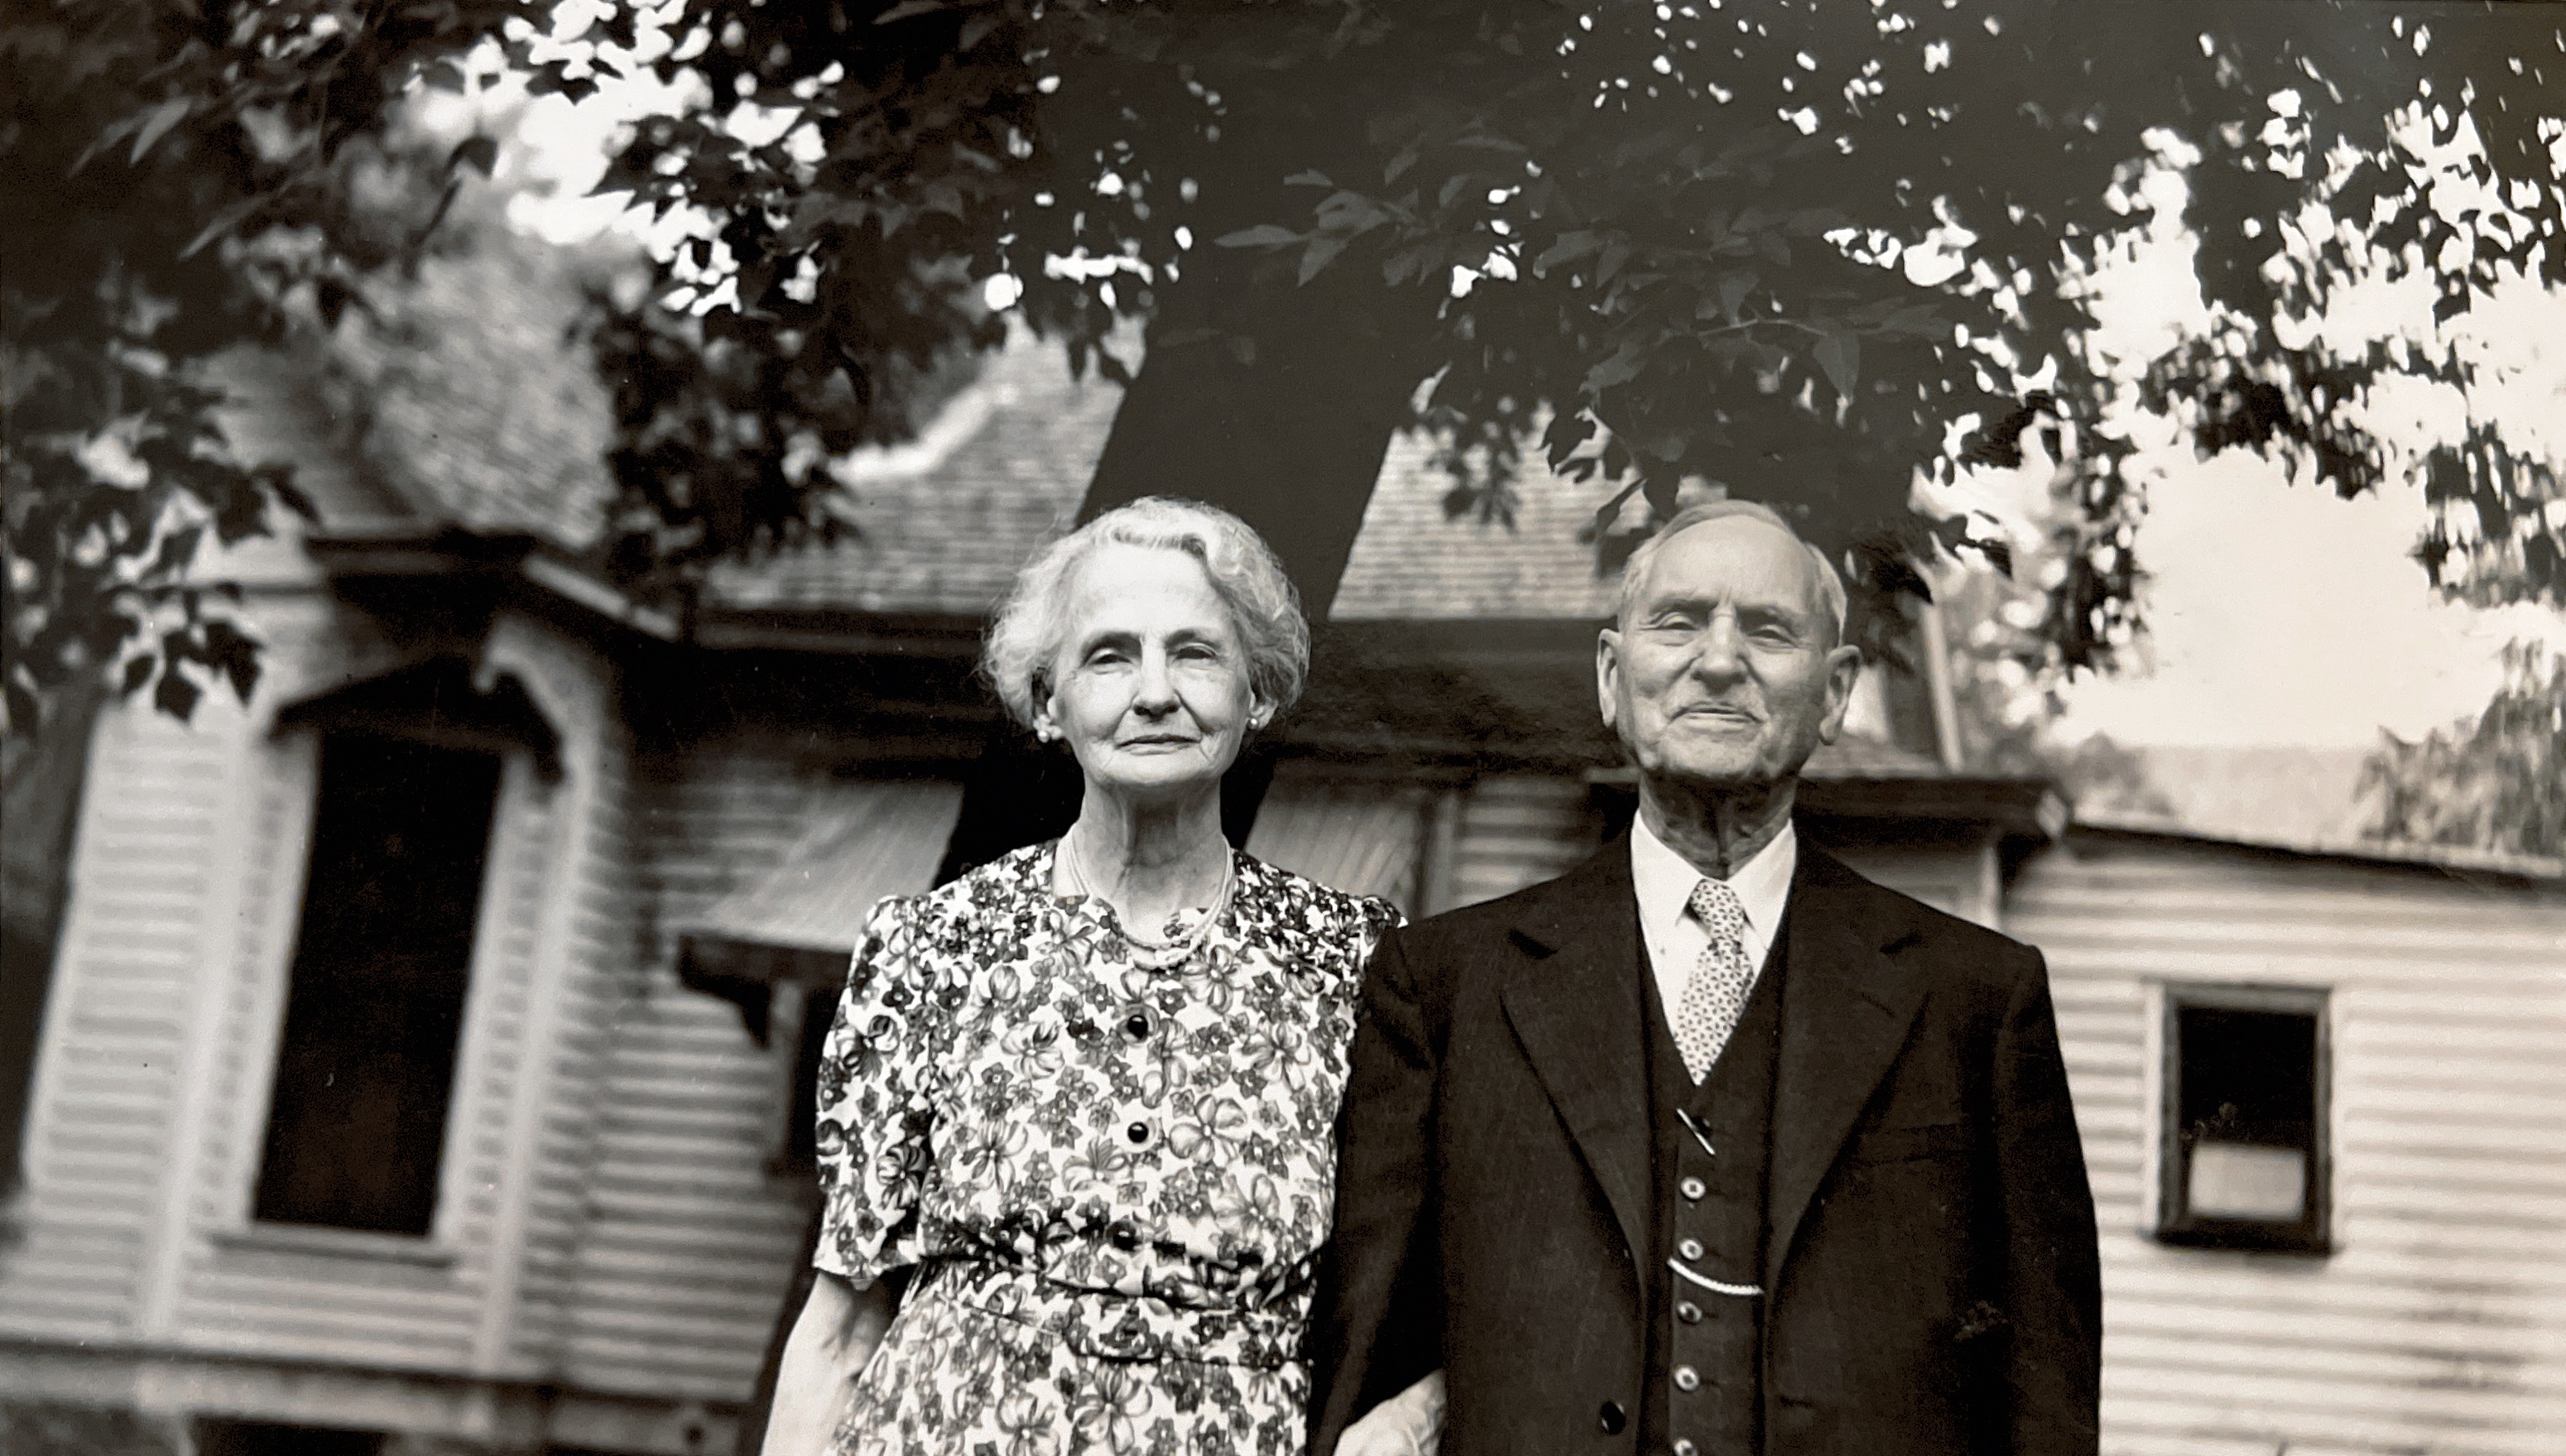 Mr. & Mrs. M.N. Olson 50th Anniversary June 24, 1943